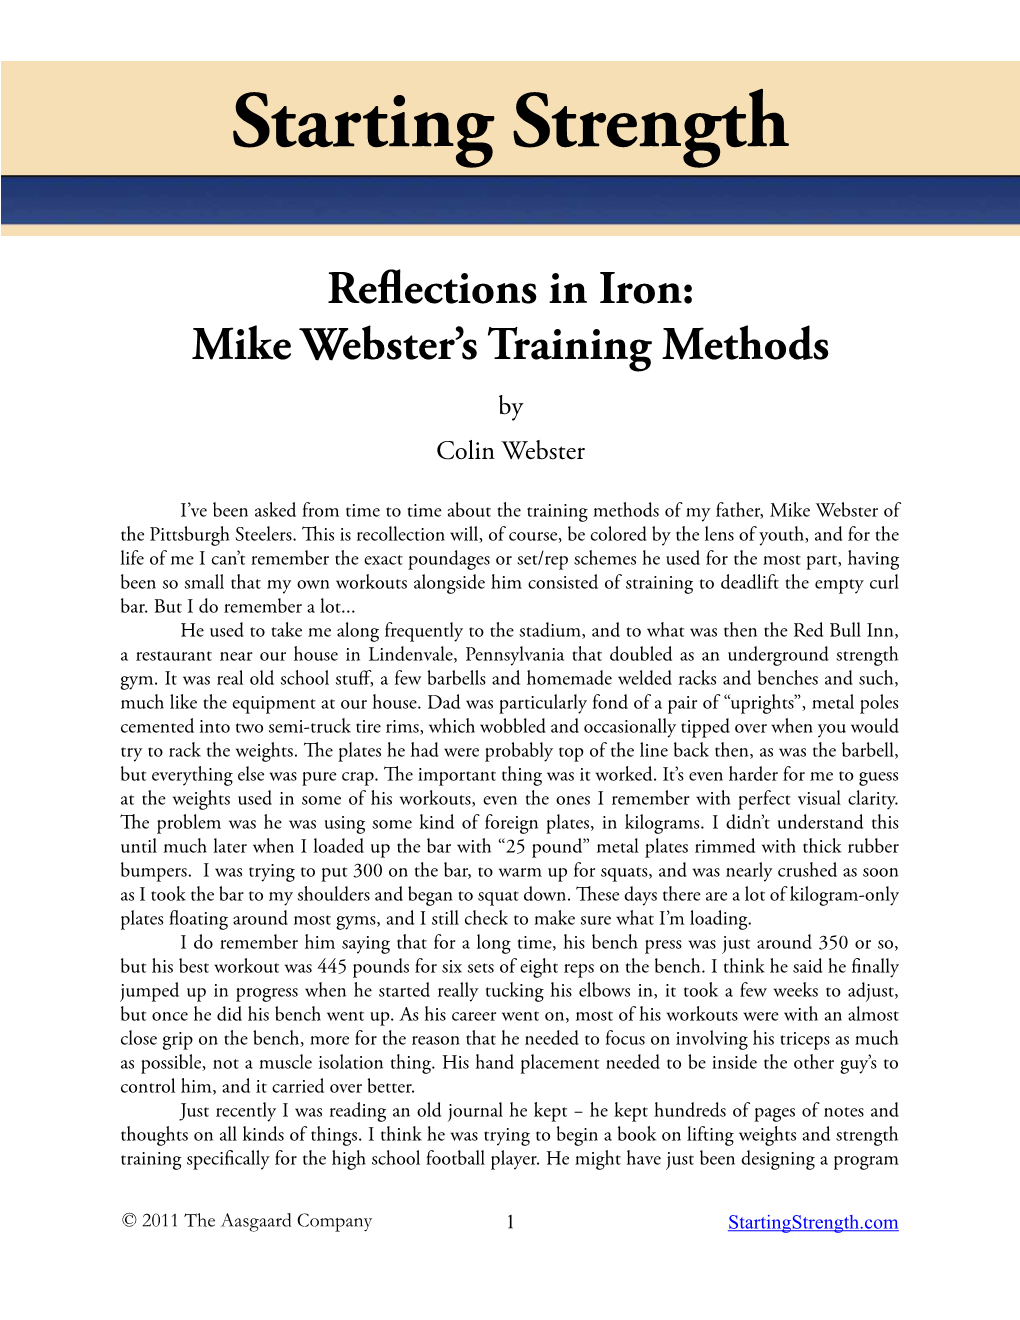 Mike Webster’S Training Methods by Colin Webster